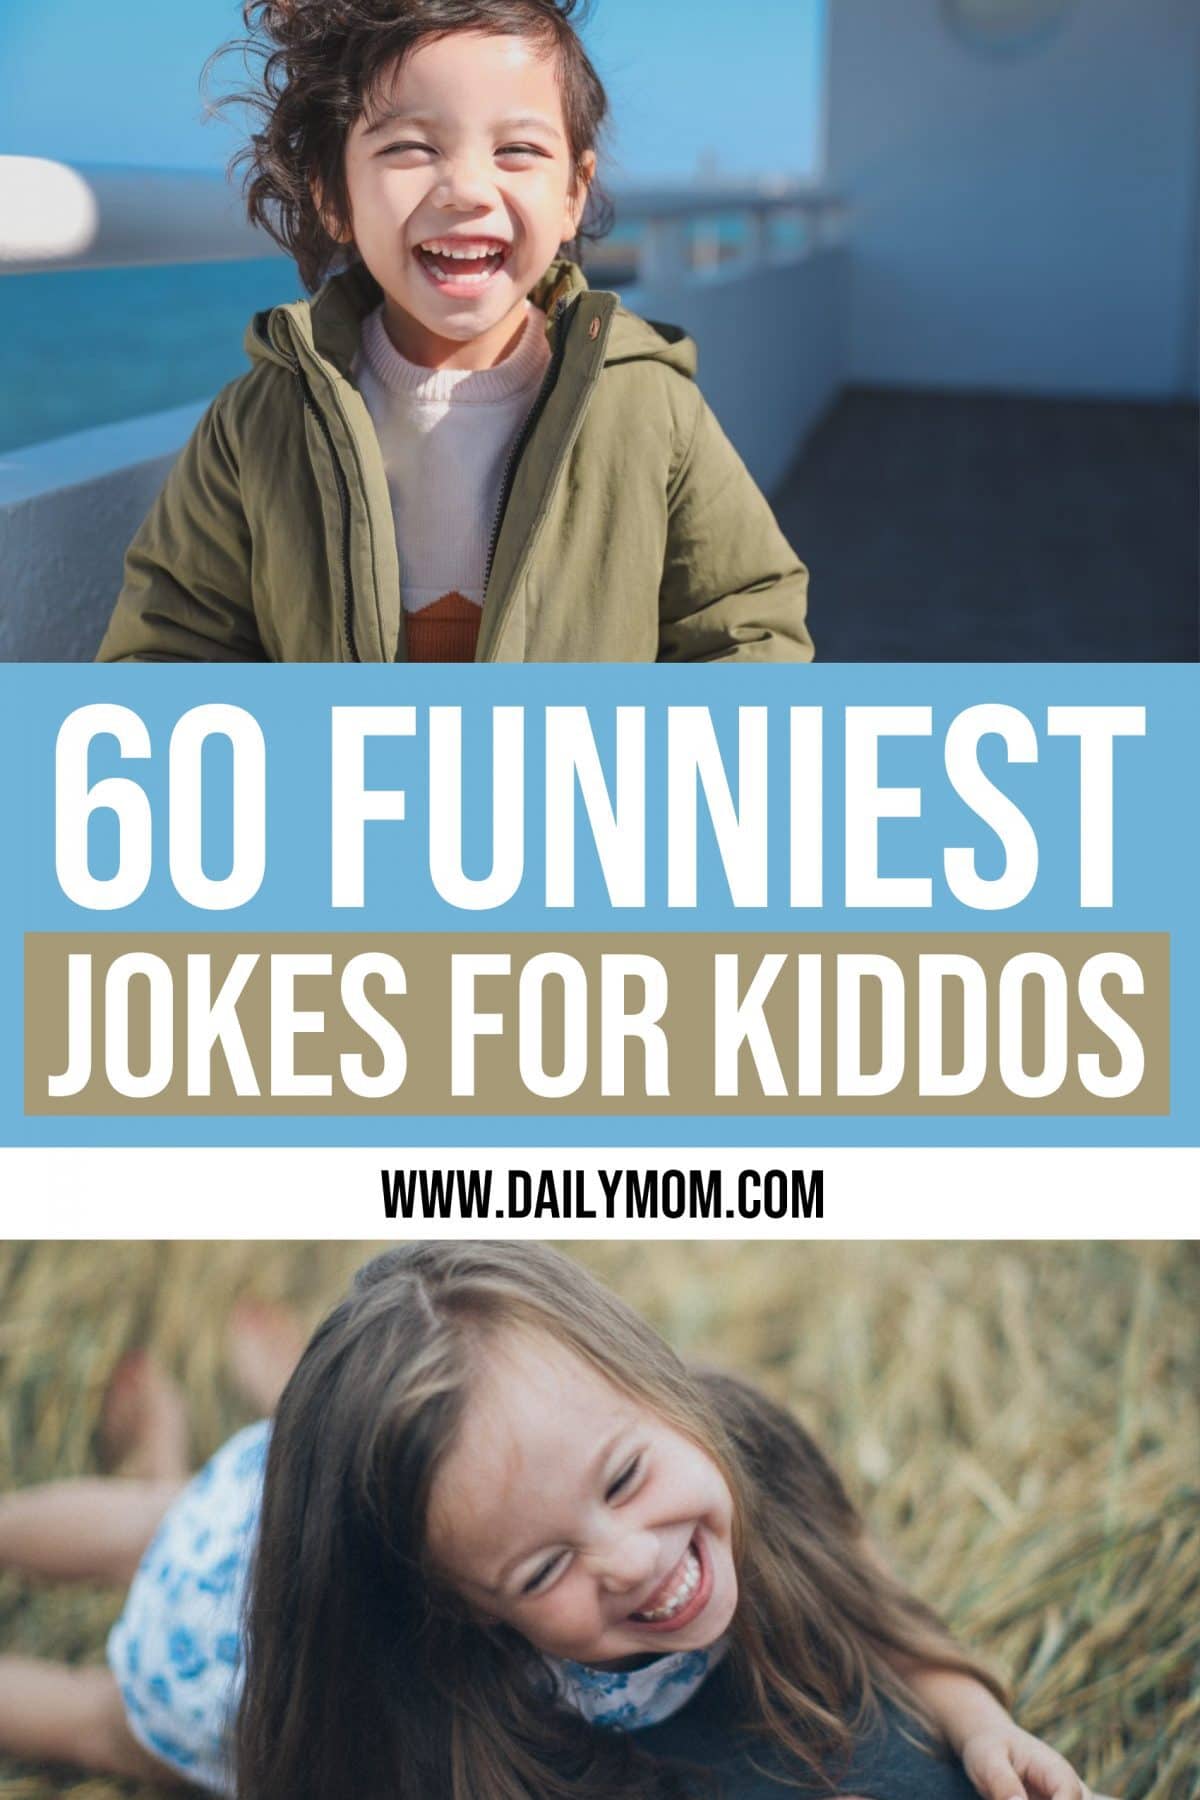 Daily Mom Parent Portal Jokes For Kiddos